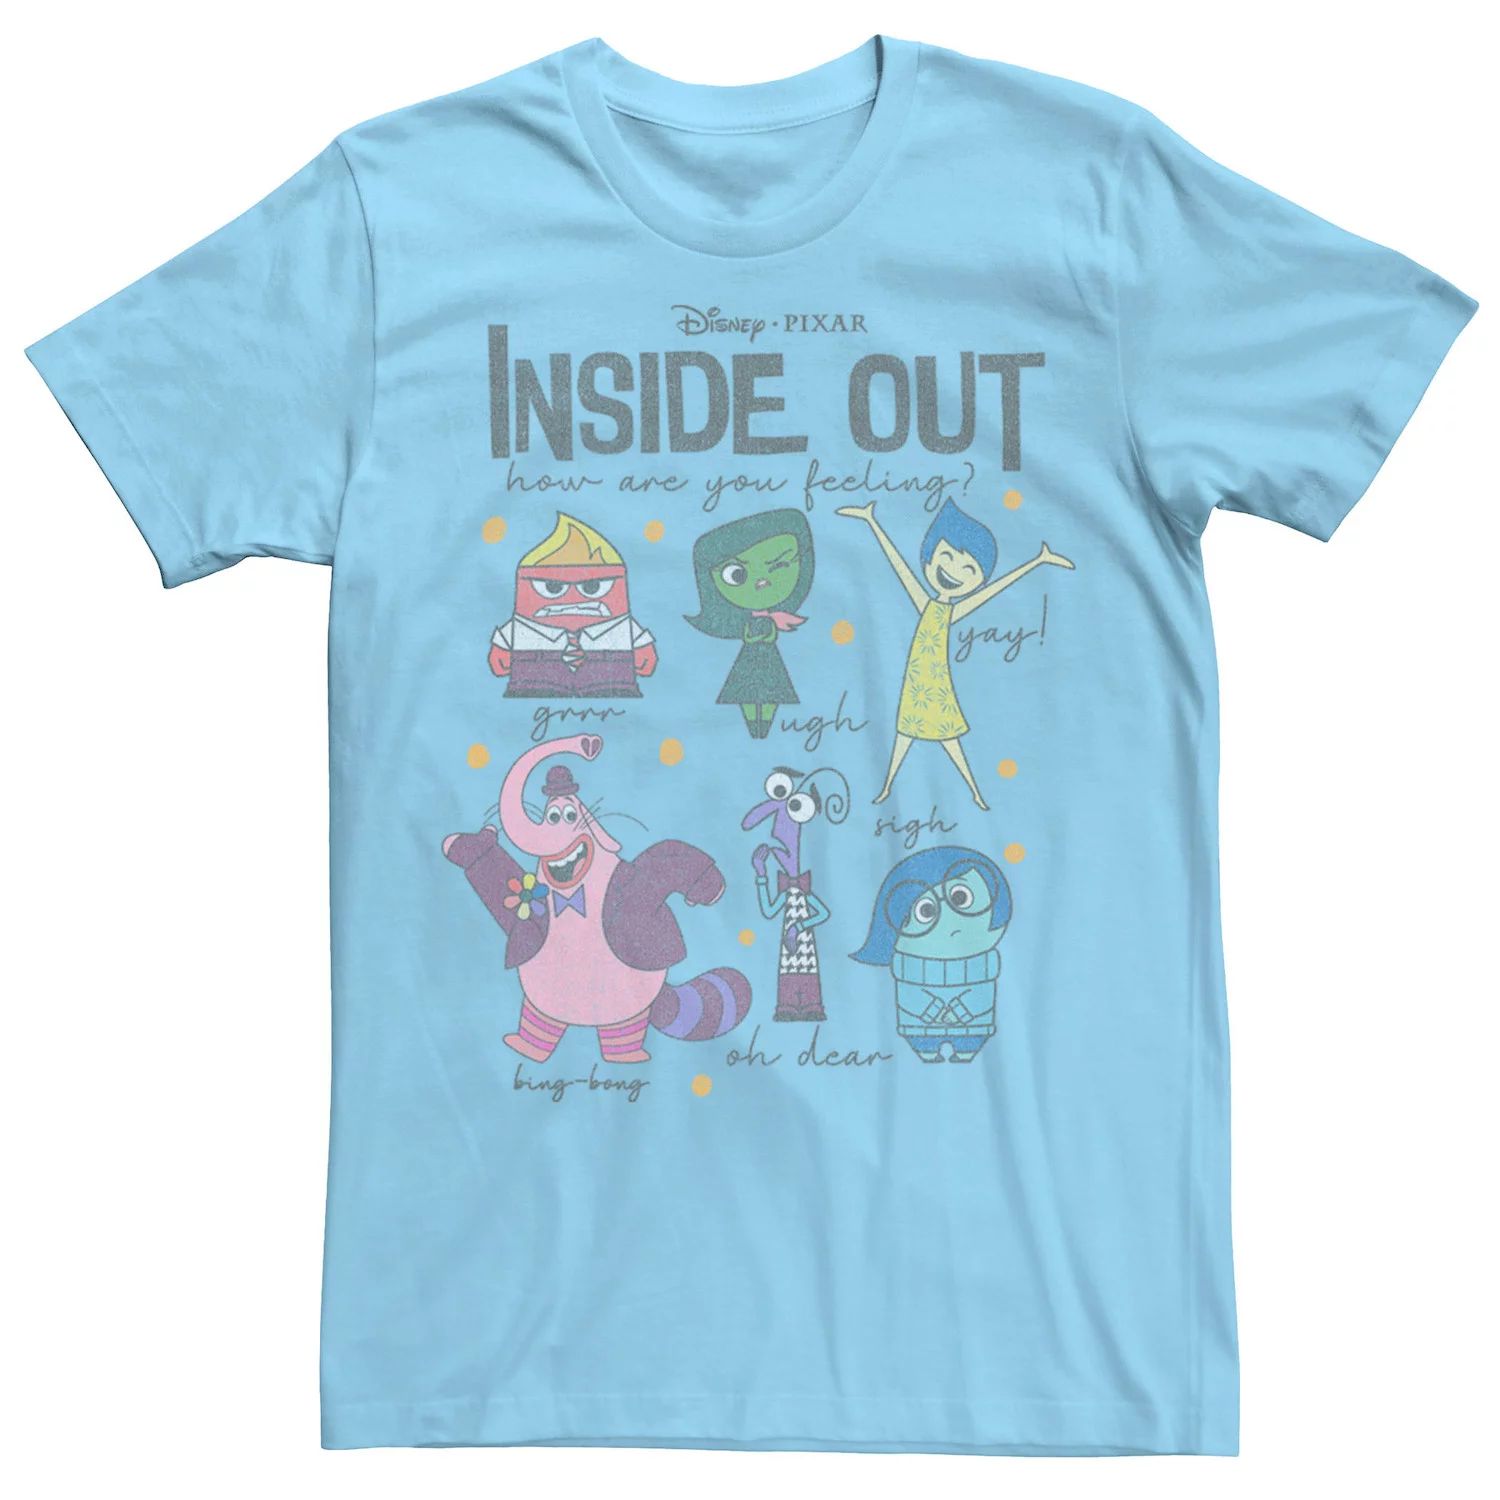 Мужская футболка с короткими рукавами Disney/Pixar Inside Out How Are You Feeling Group Photo Disney / Pixar, светло-синий